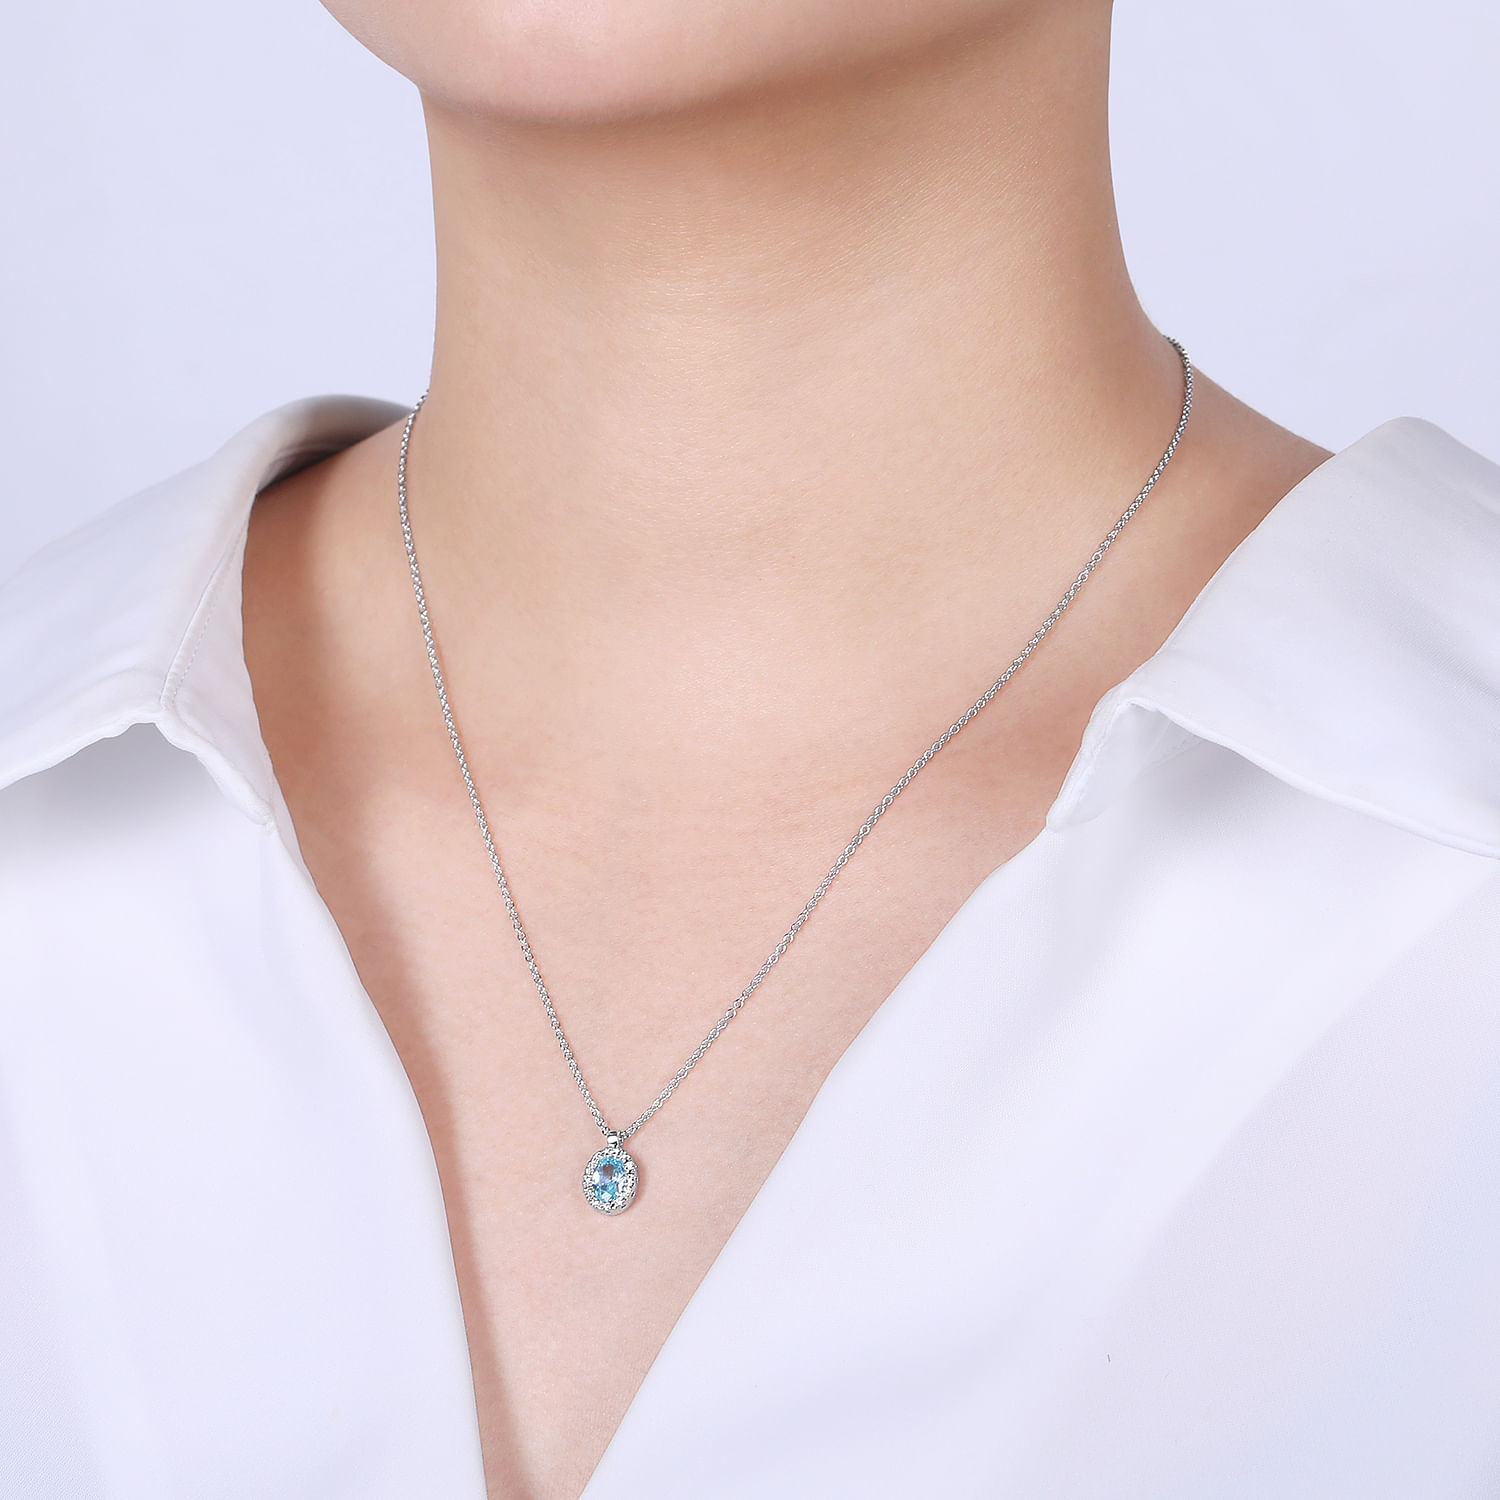 18 inch 14K White Gold Aquamarine and Diamond Halo Drop Necklace